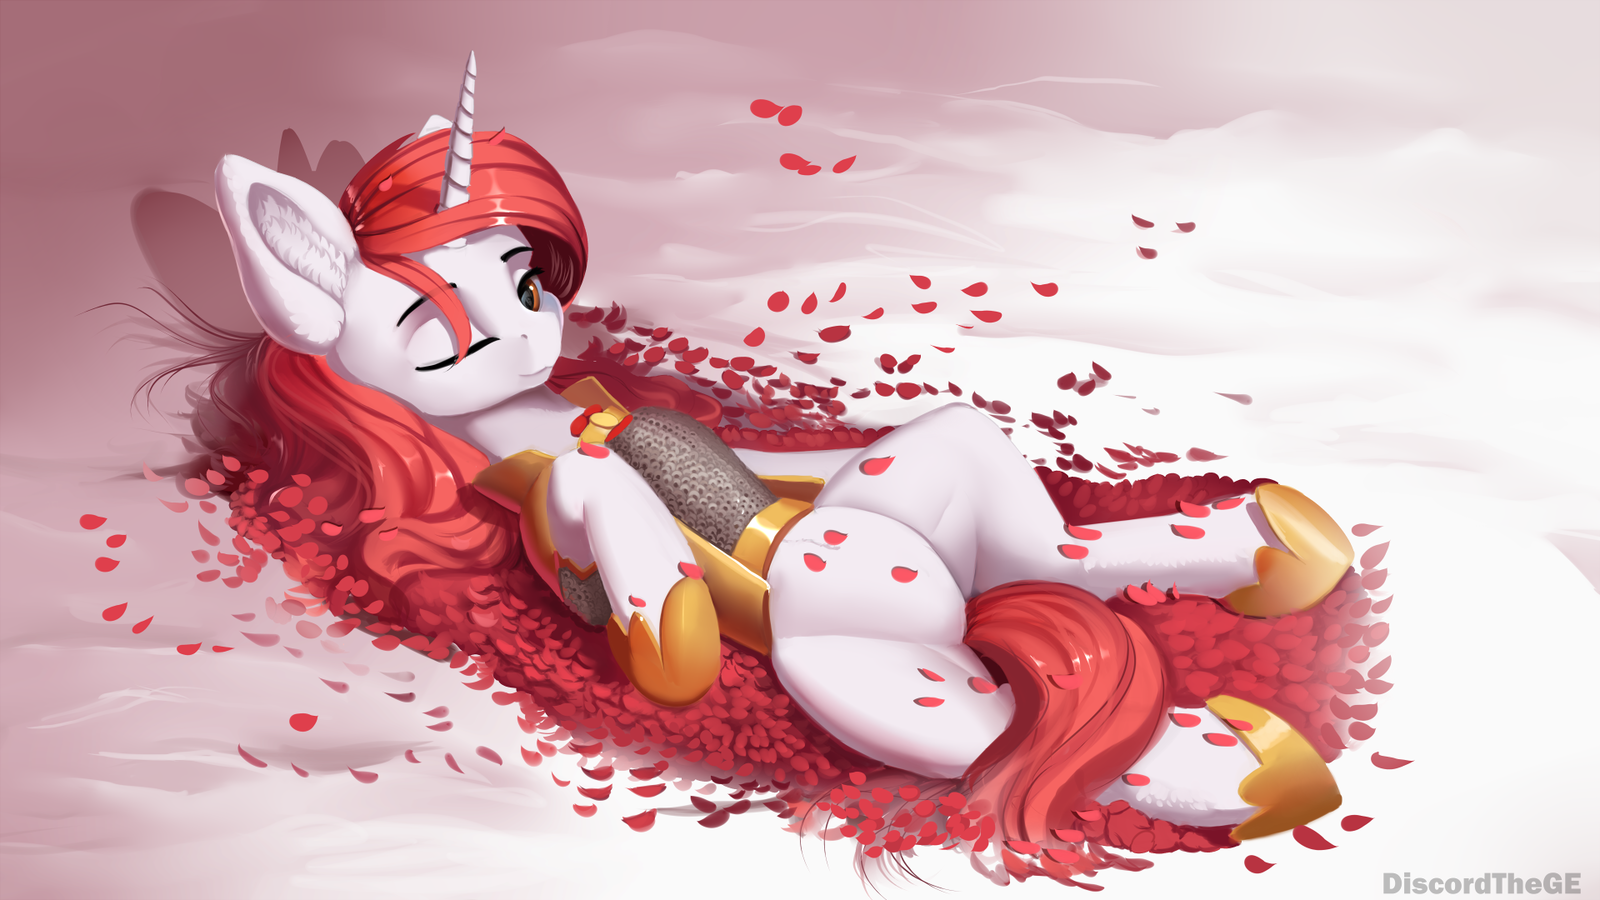 Roses Without Demons - My little pony, Princess celestia, Discordthege